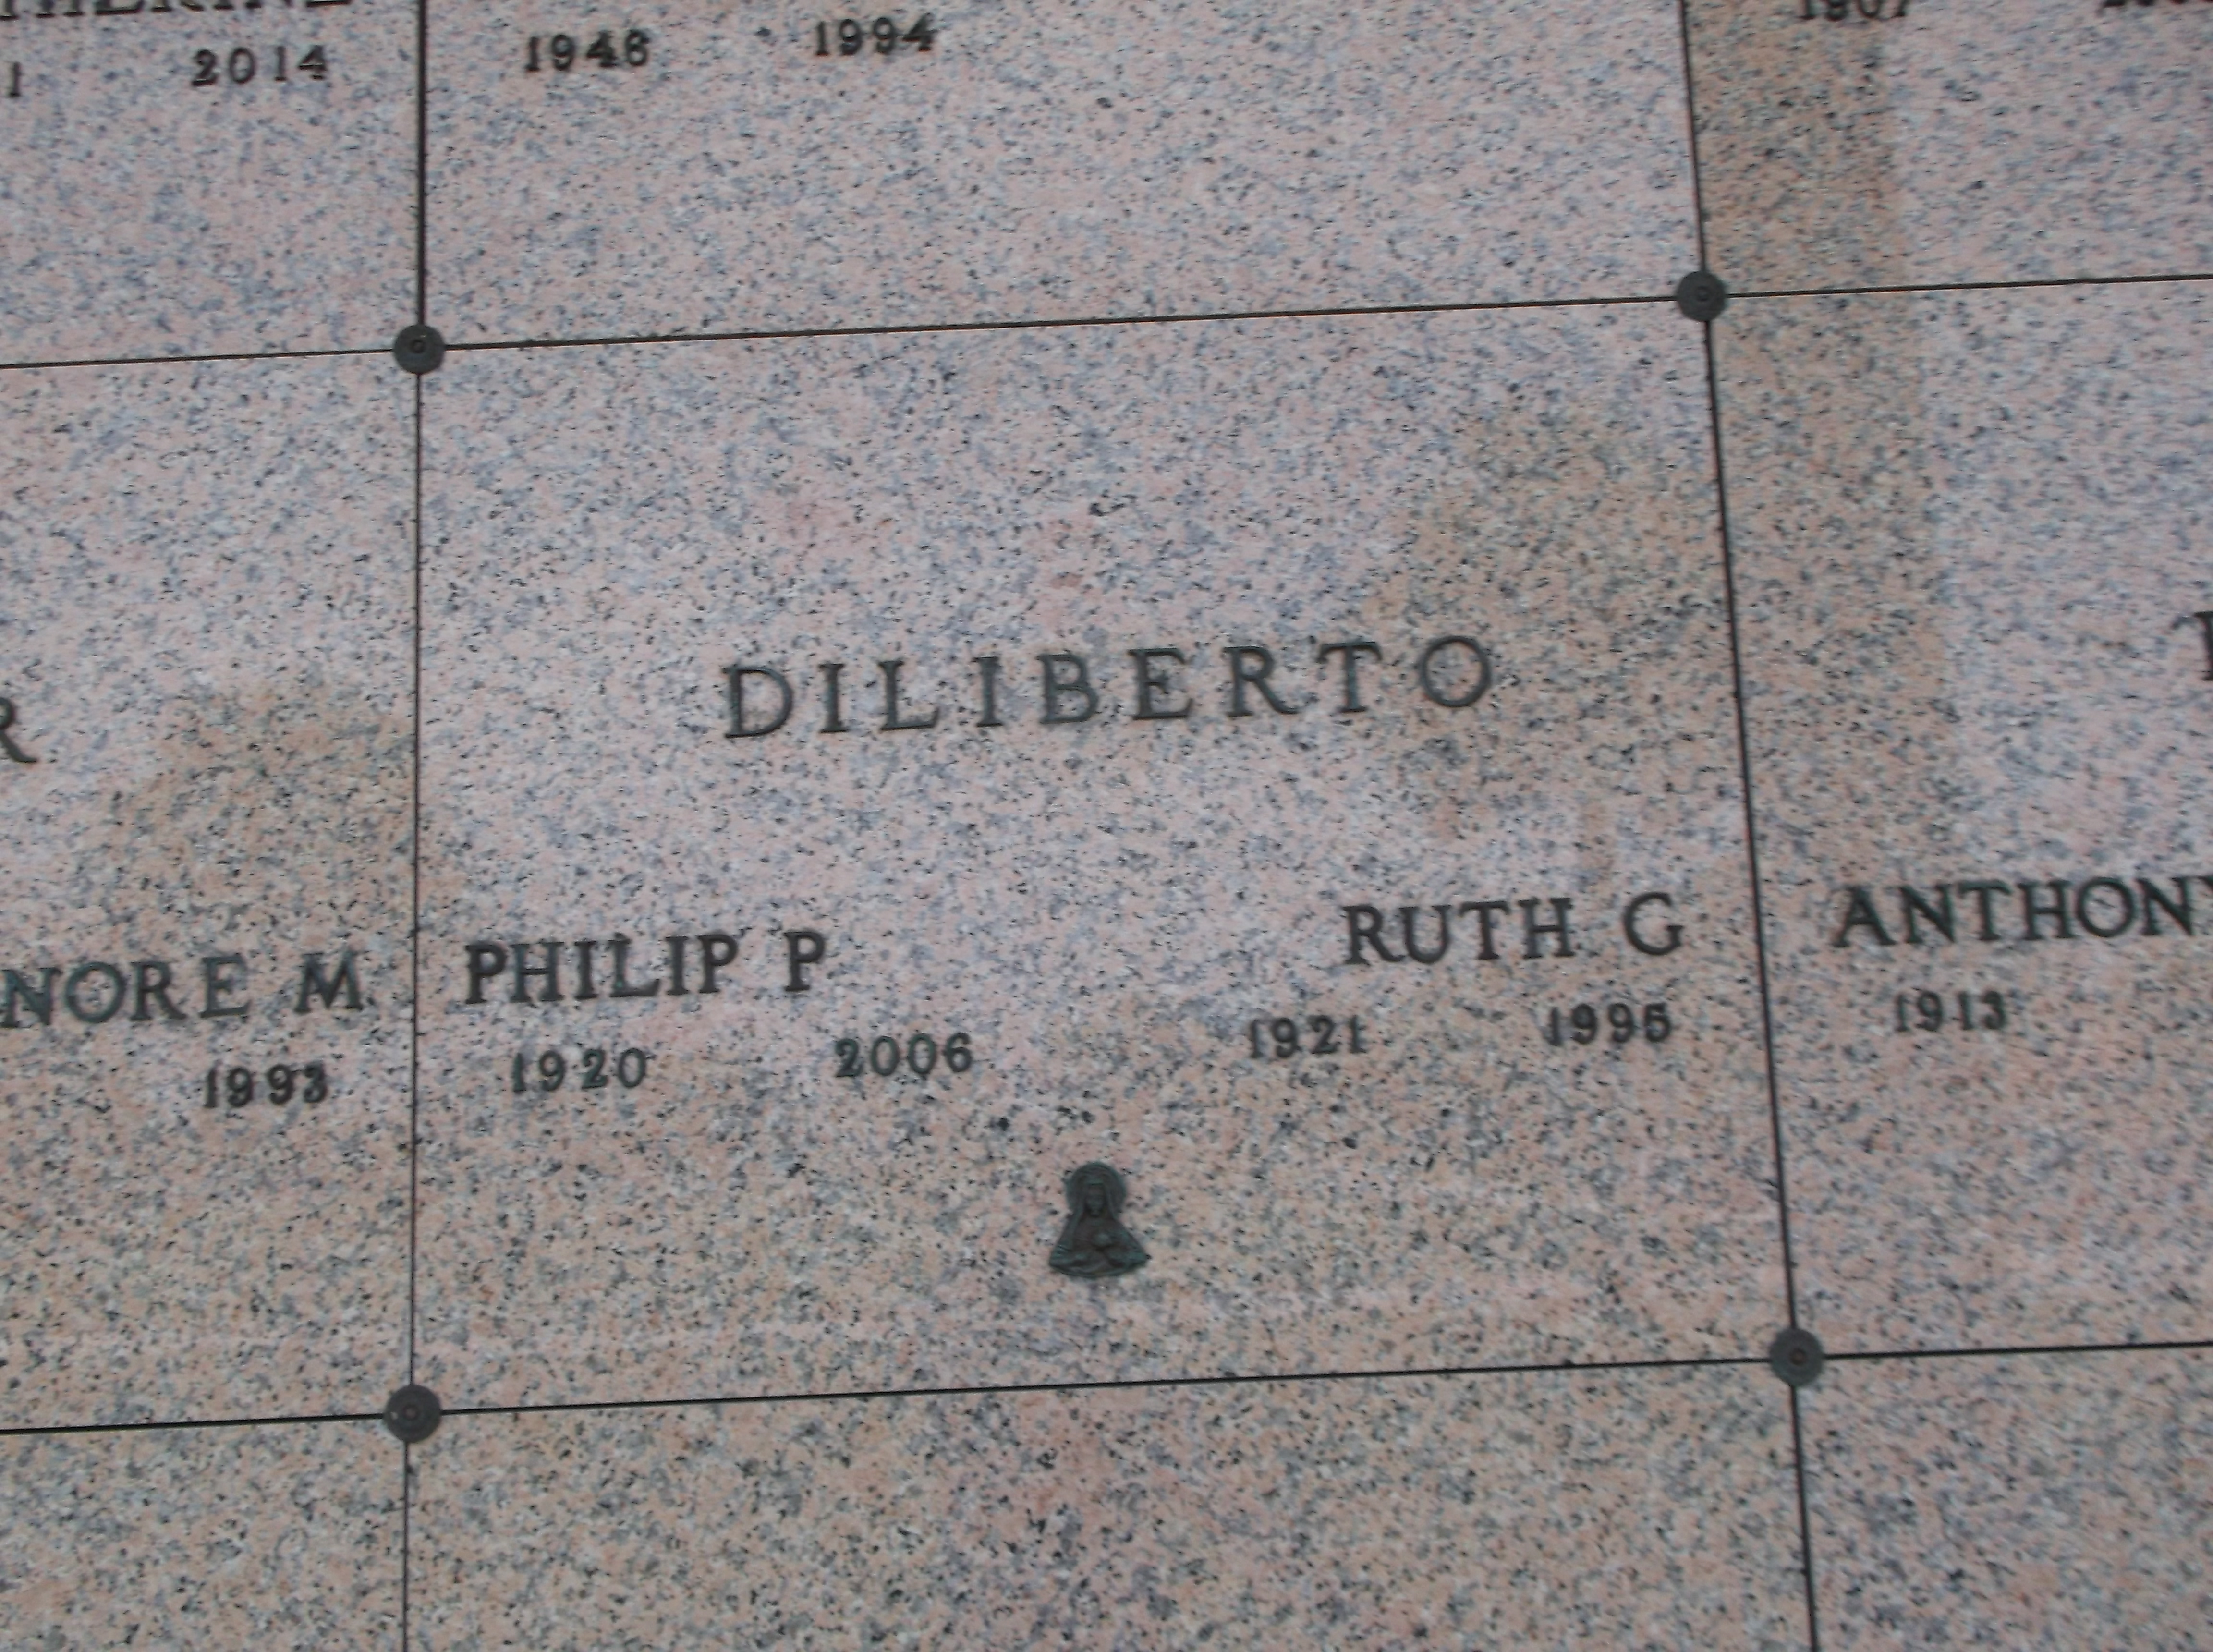 Philip P Diliberto